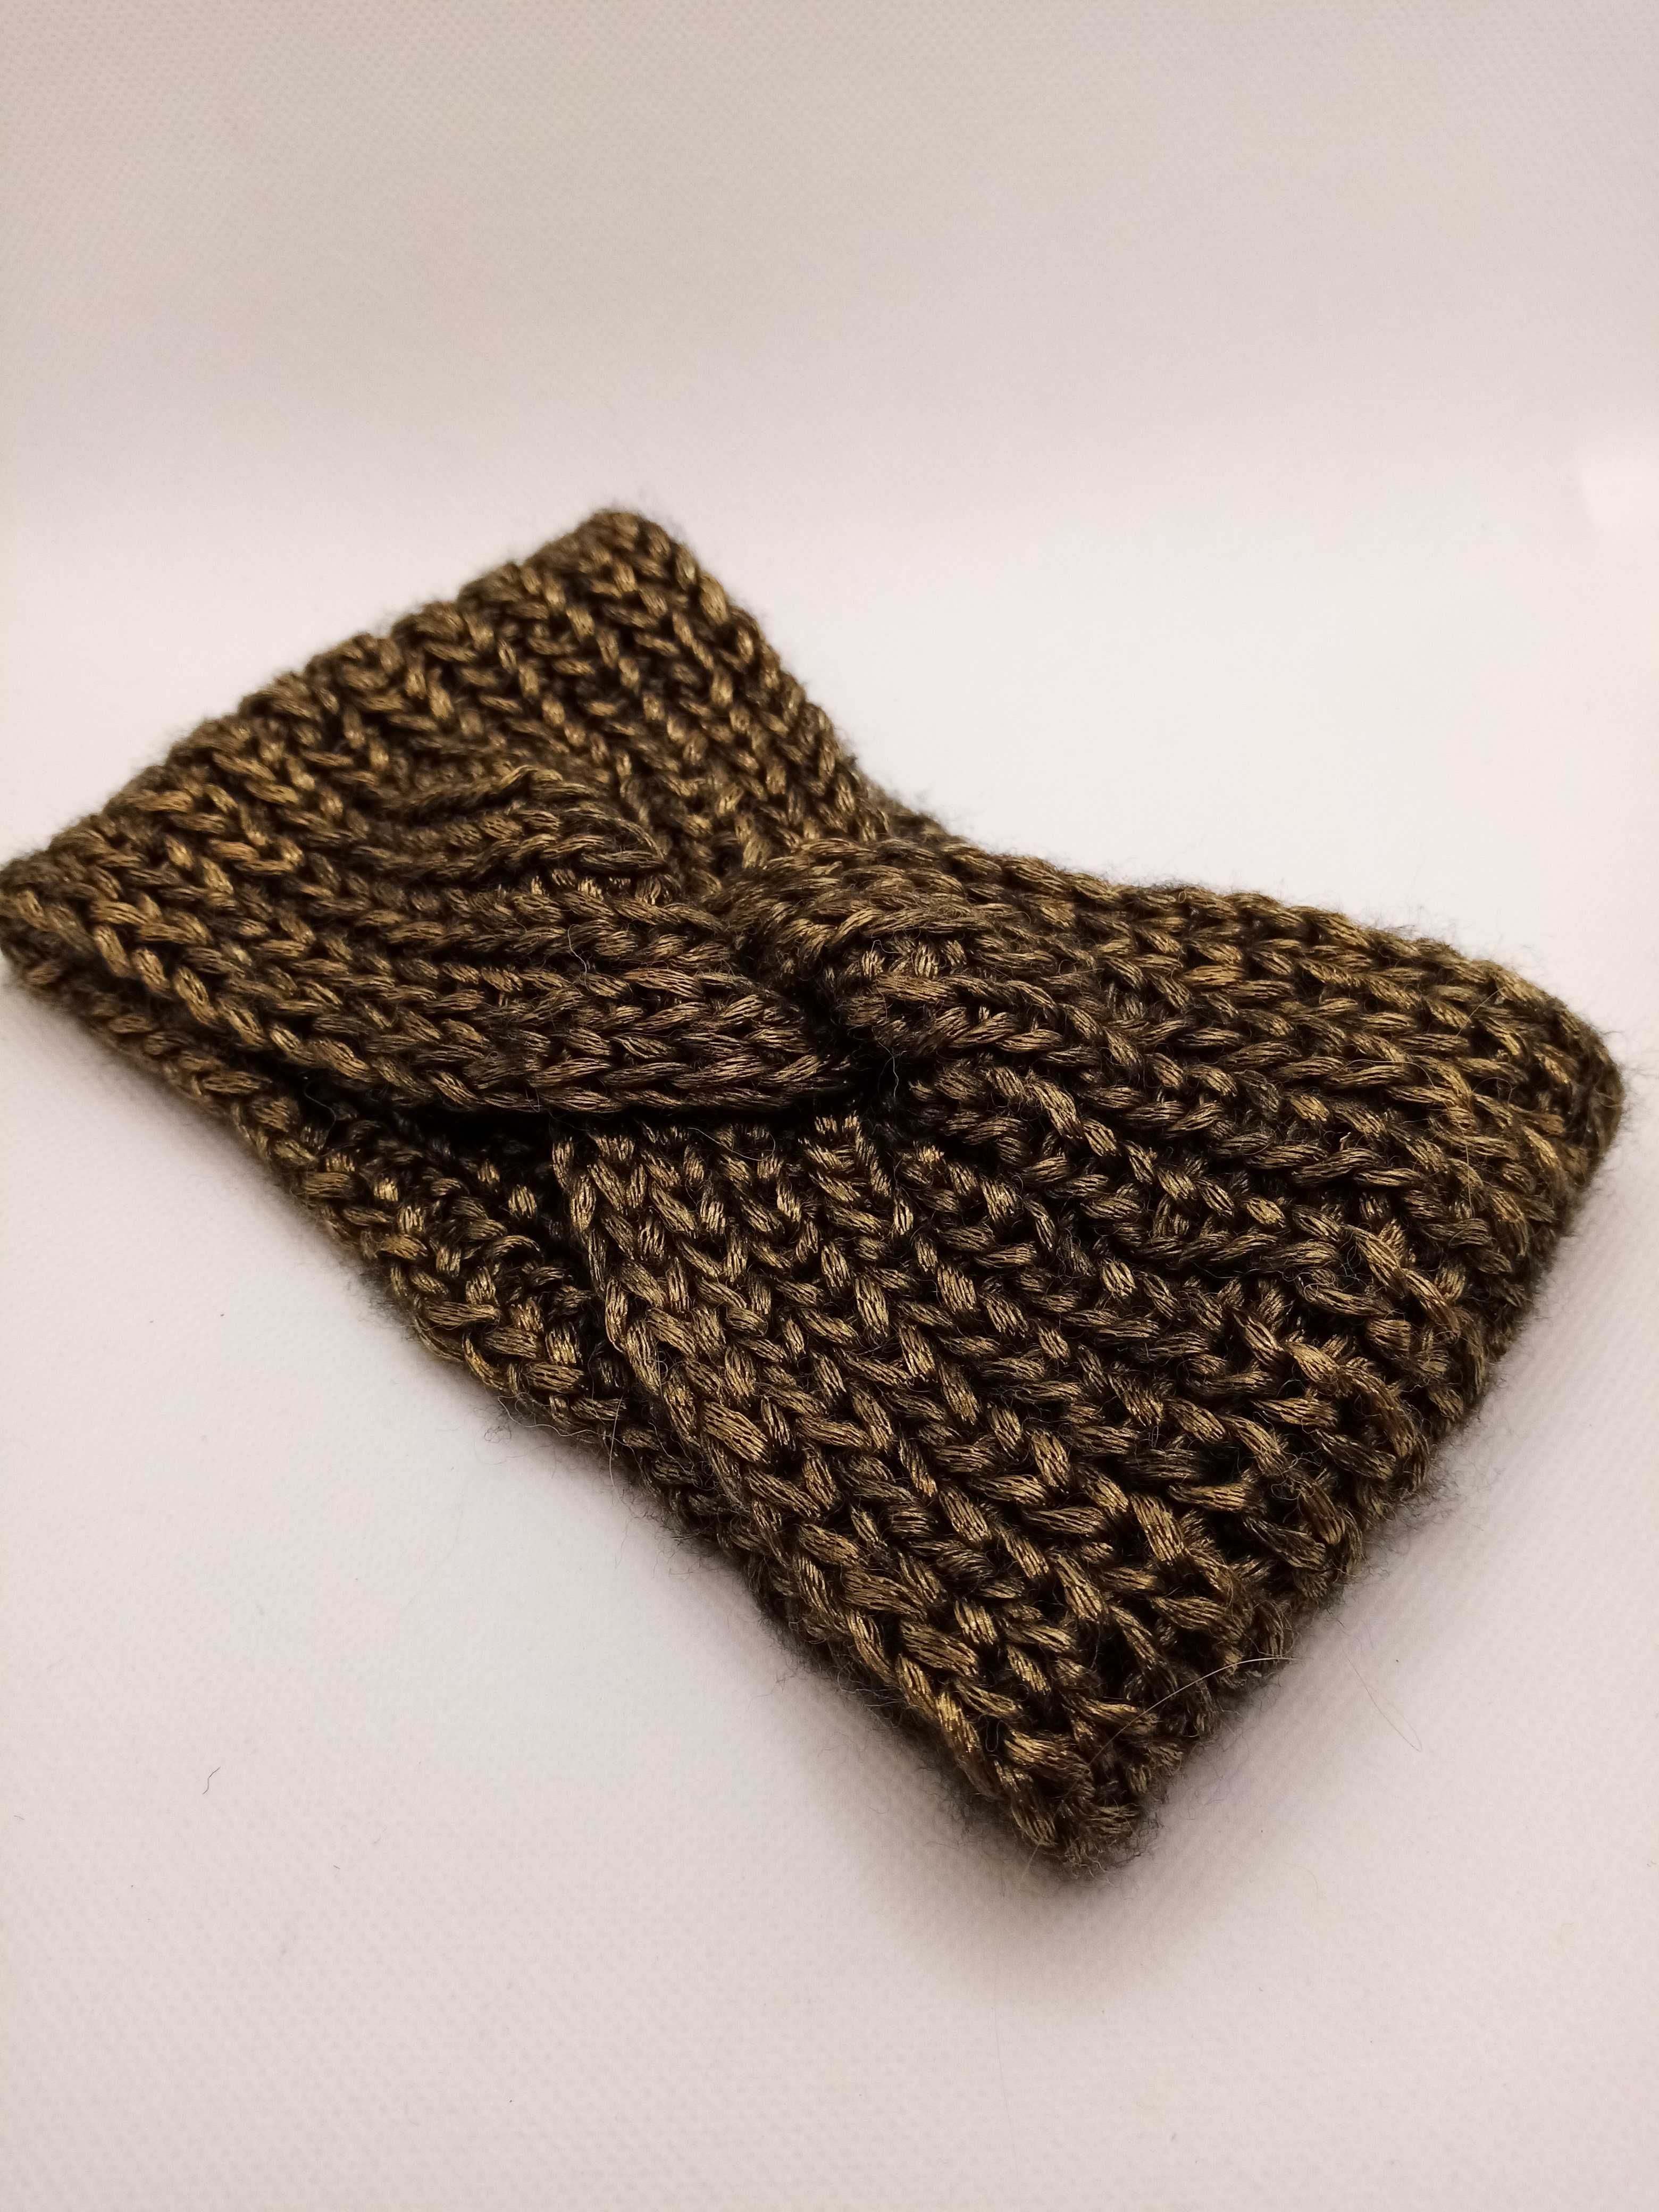 Damska, beżowo-złota opaska-turban; handmade